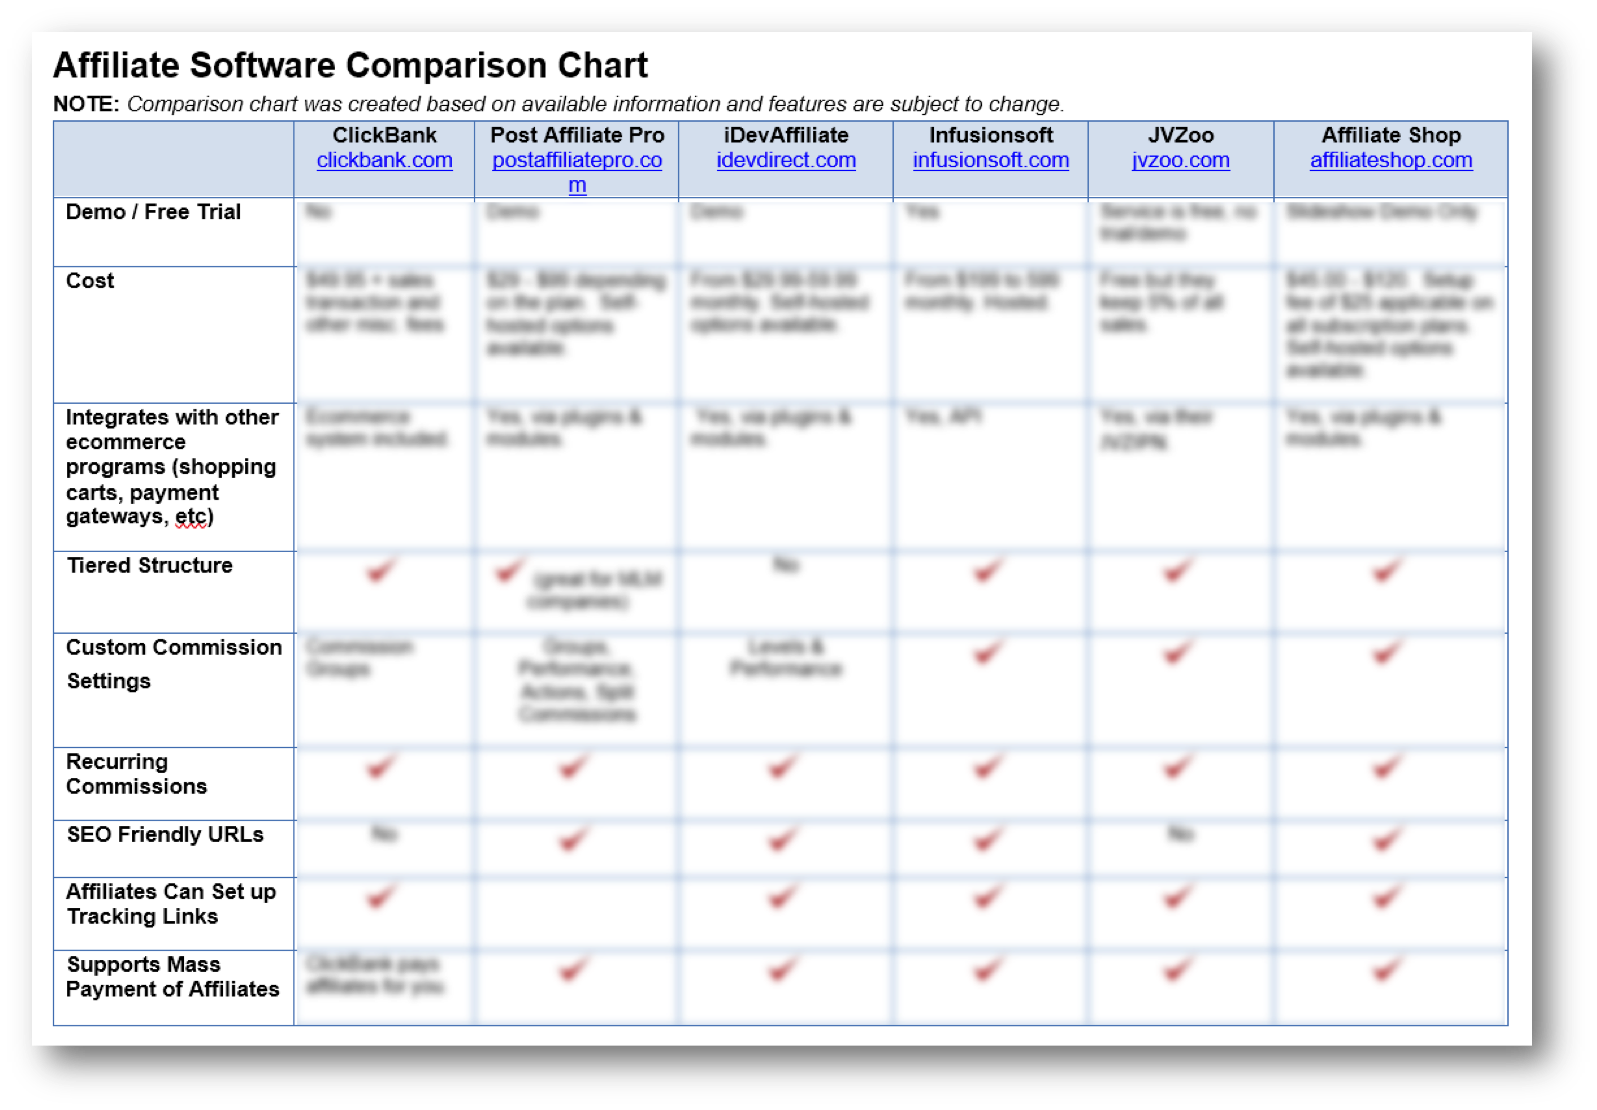 Infusionsoft Comparison Chart